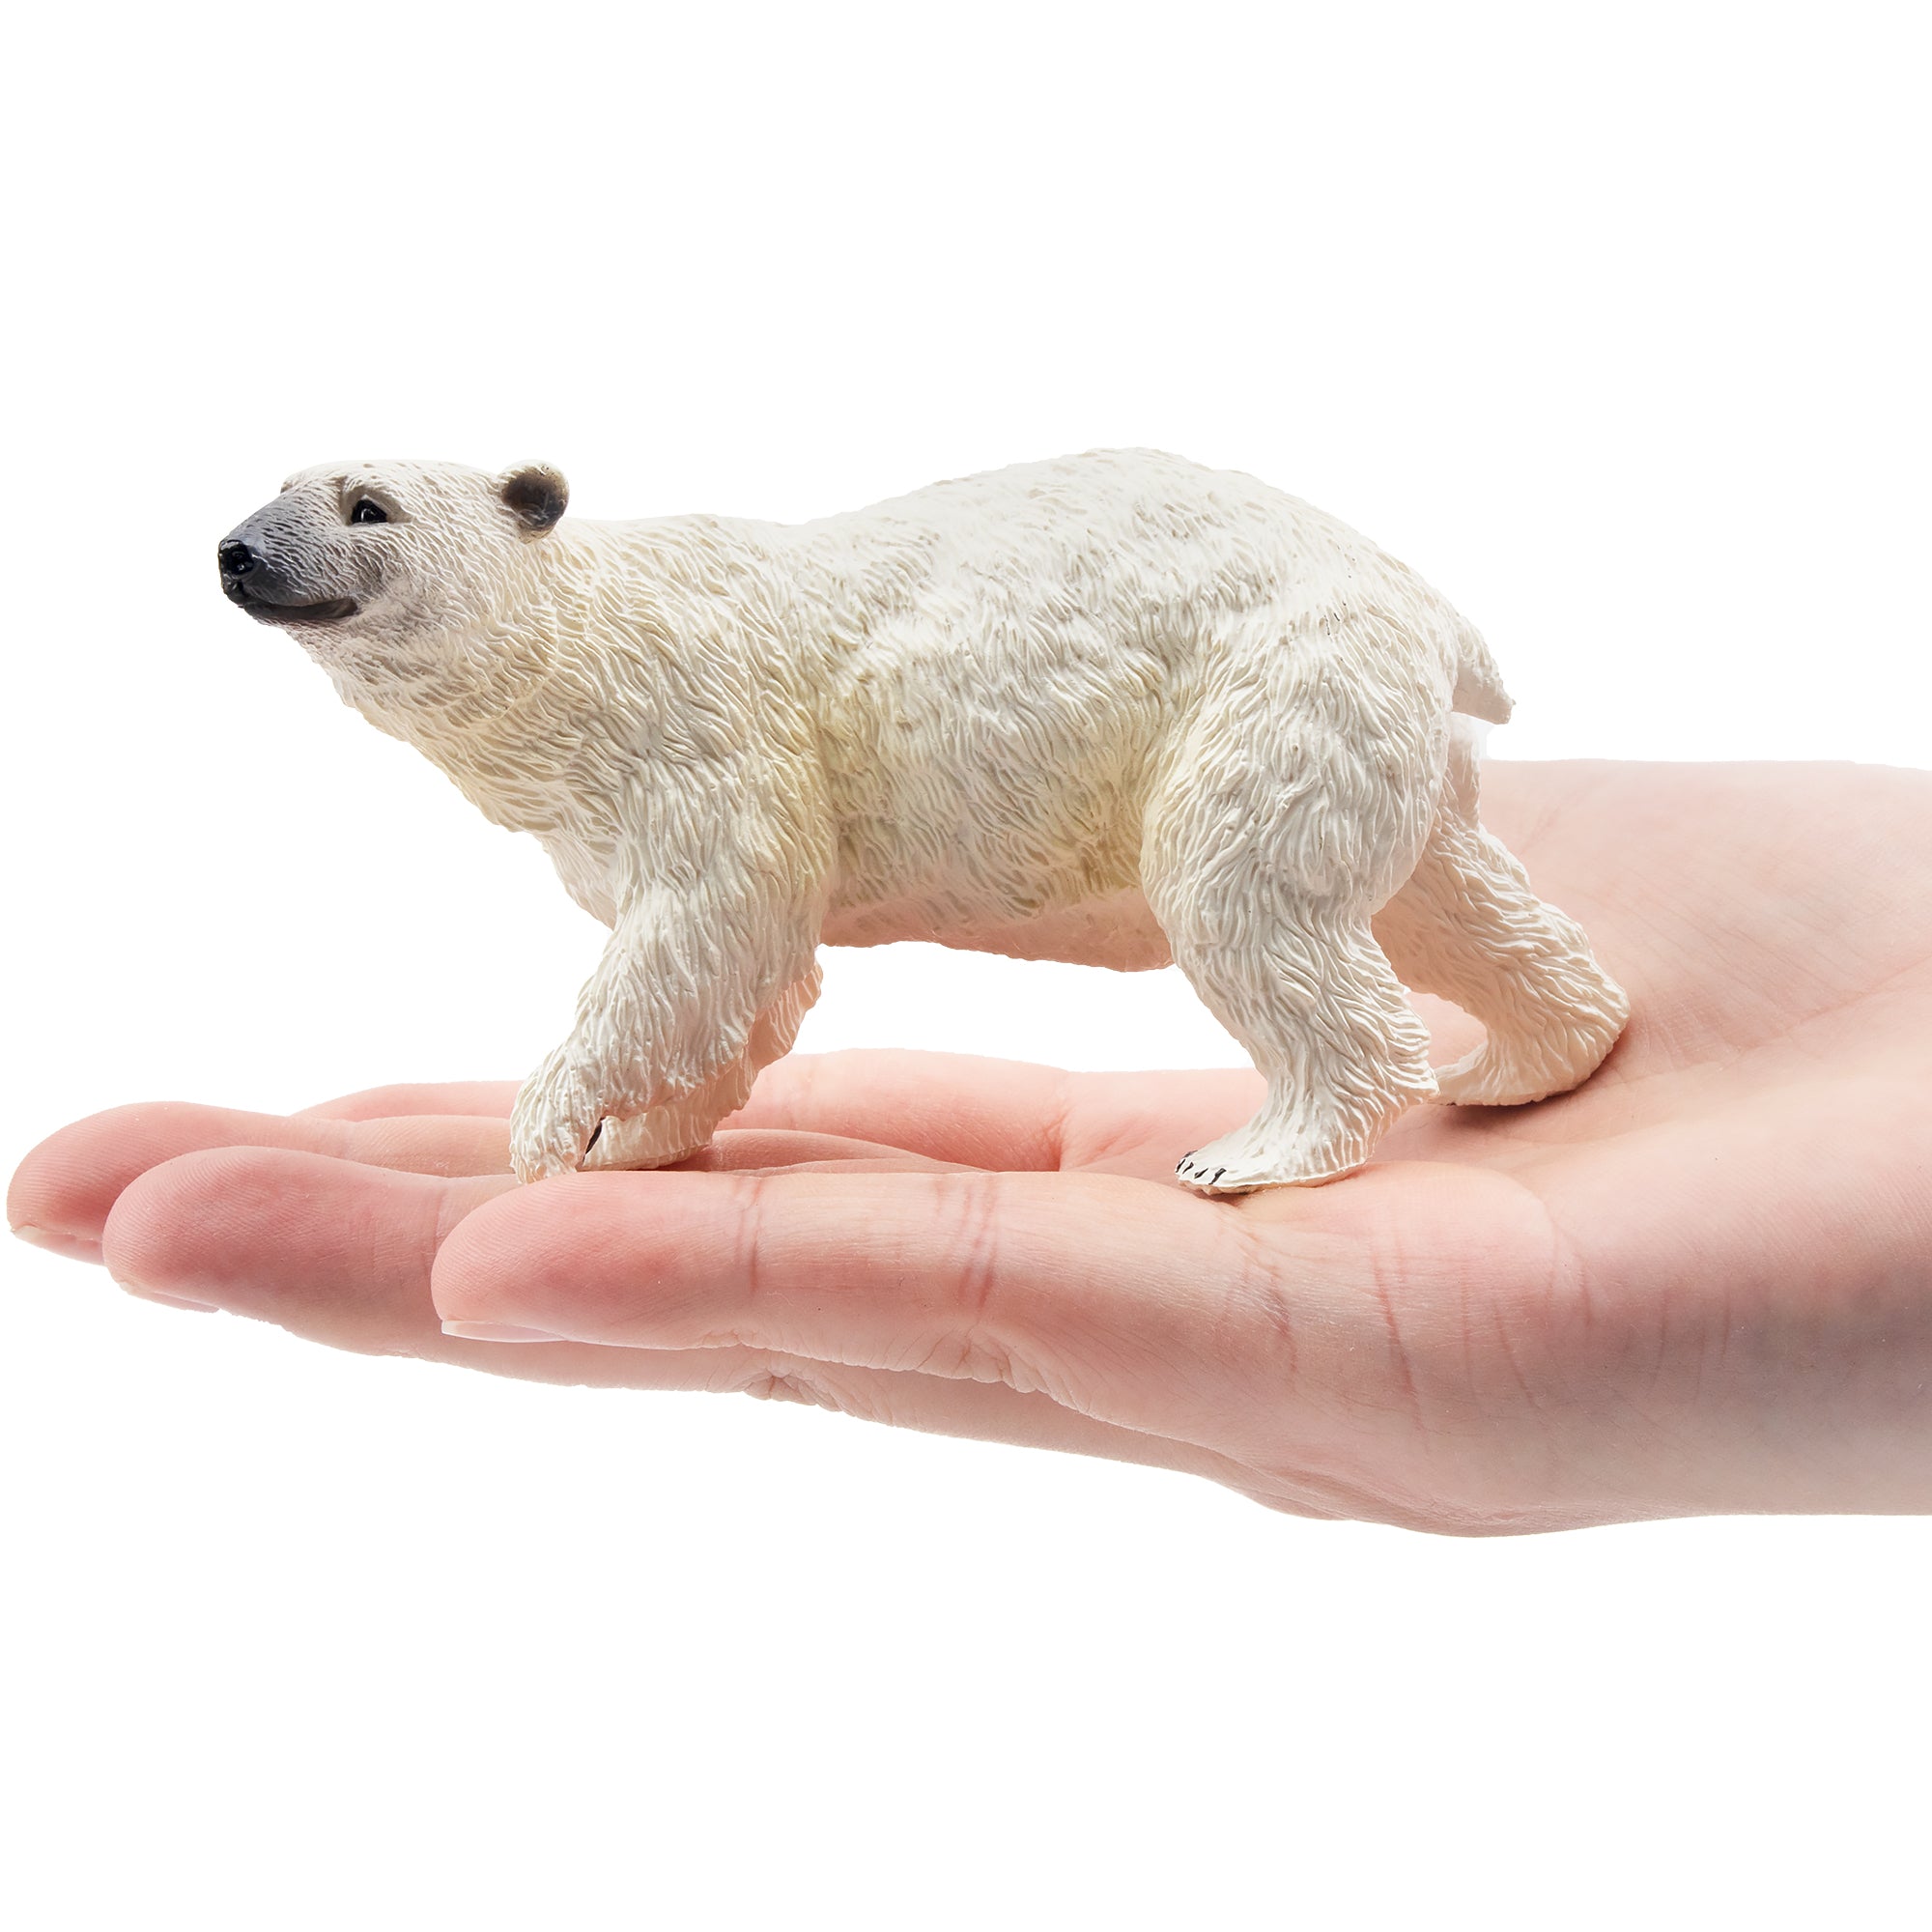 Toymany Male Polar Bear Figurine Toy-on hand